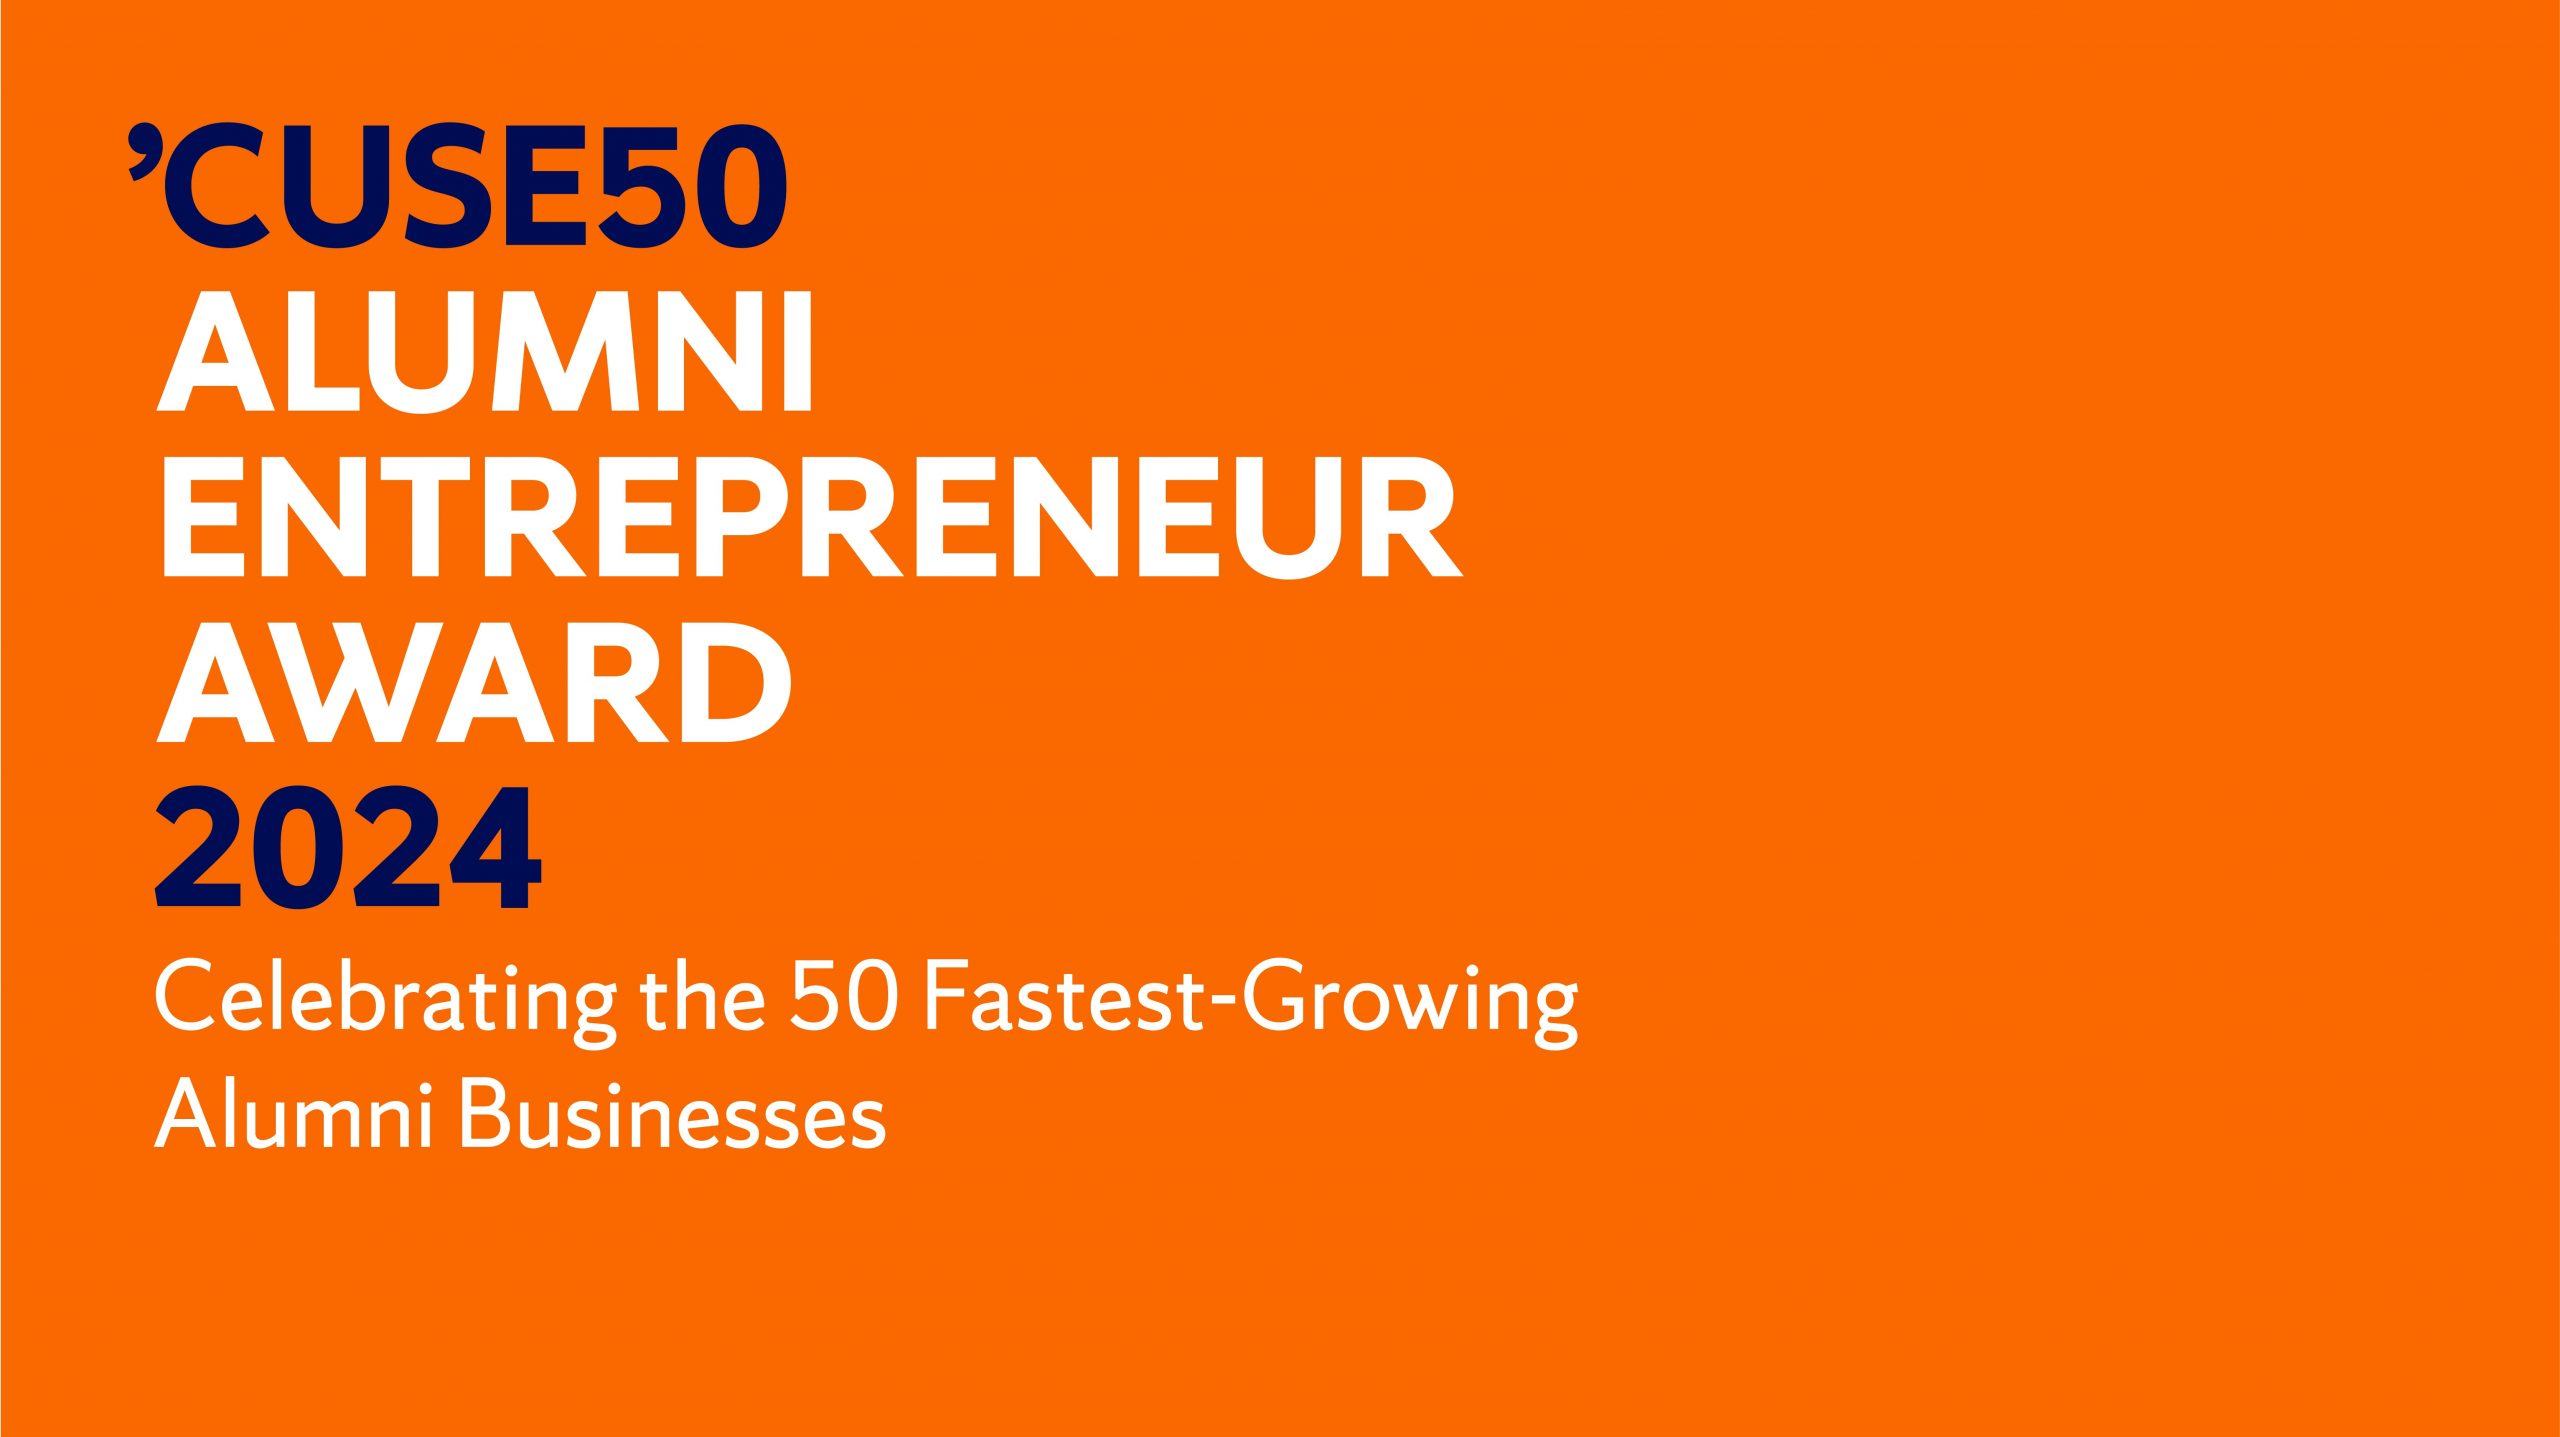 text: "’Cuse50 Alumni Entrepreneur Award 2024, Celebrating the 50 Fastest-Growing Alumni Businesses" on an orange background